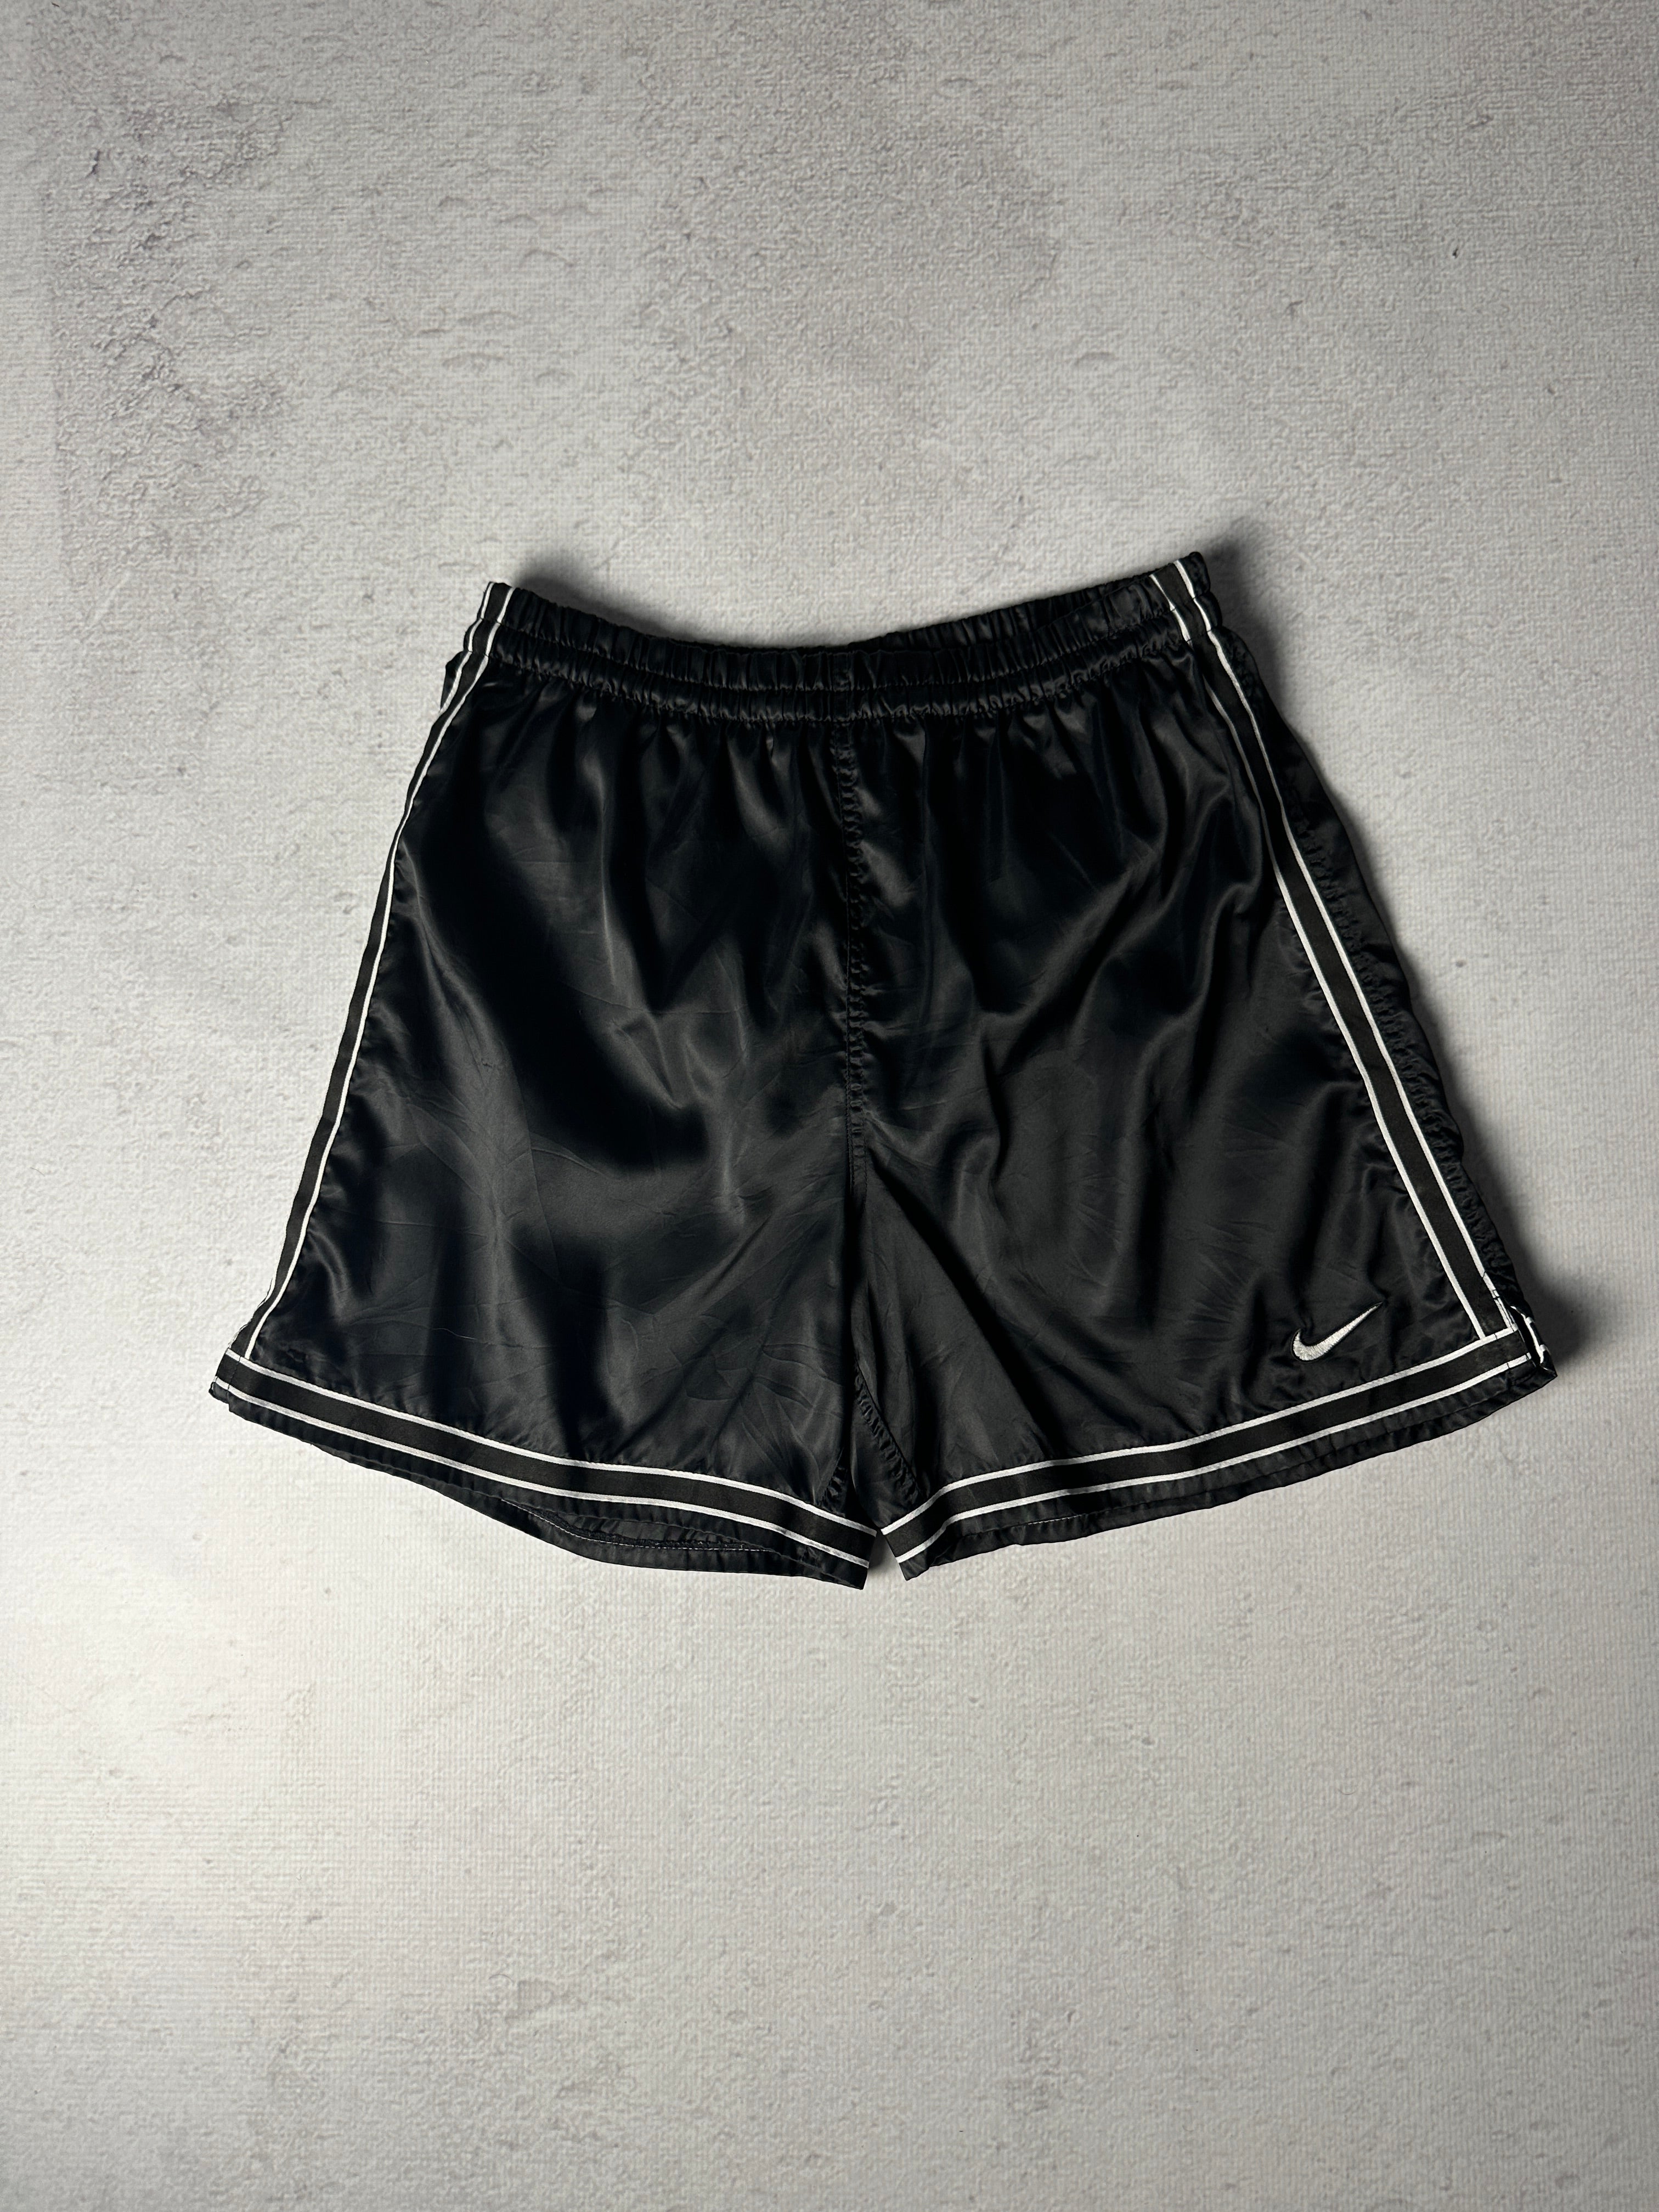 Vintage Nike Shorts - Men's Large